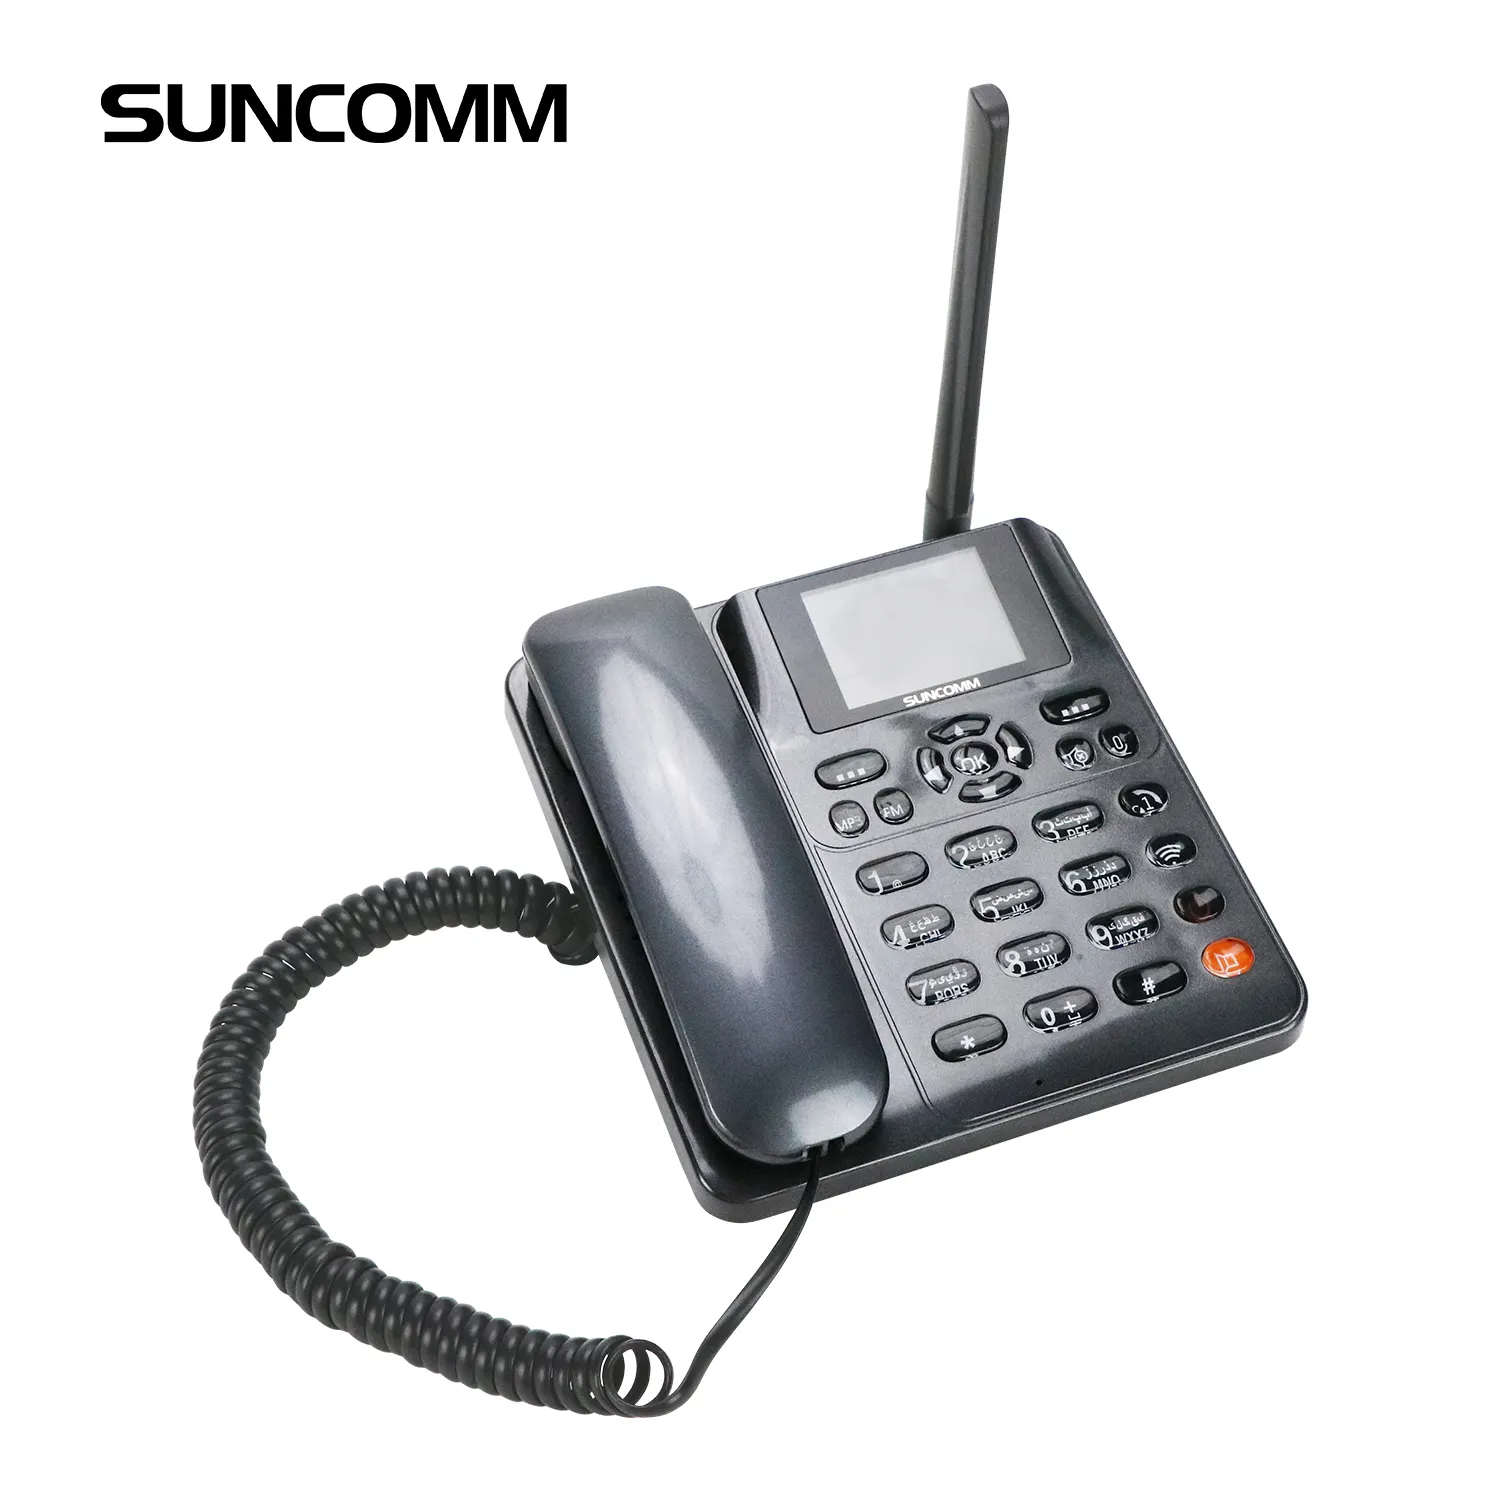 SUNCOMM 4G LTE Telefone Sem Fio LTE 818 WIFI FM Record MP3 Mudo escritório Telefone Fixo Sem Fio